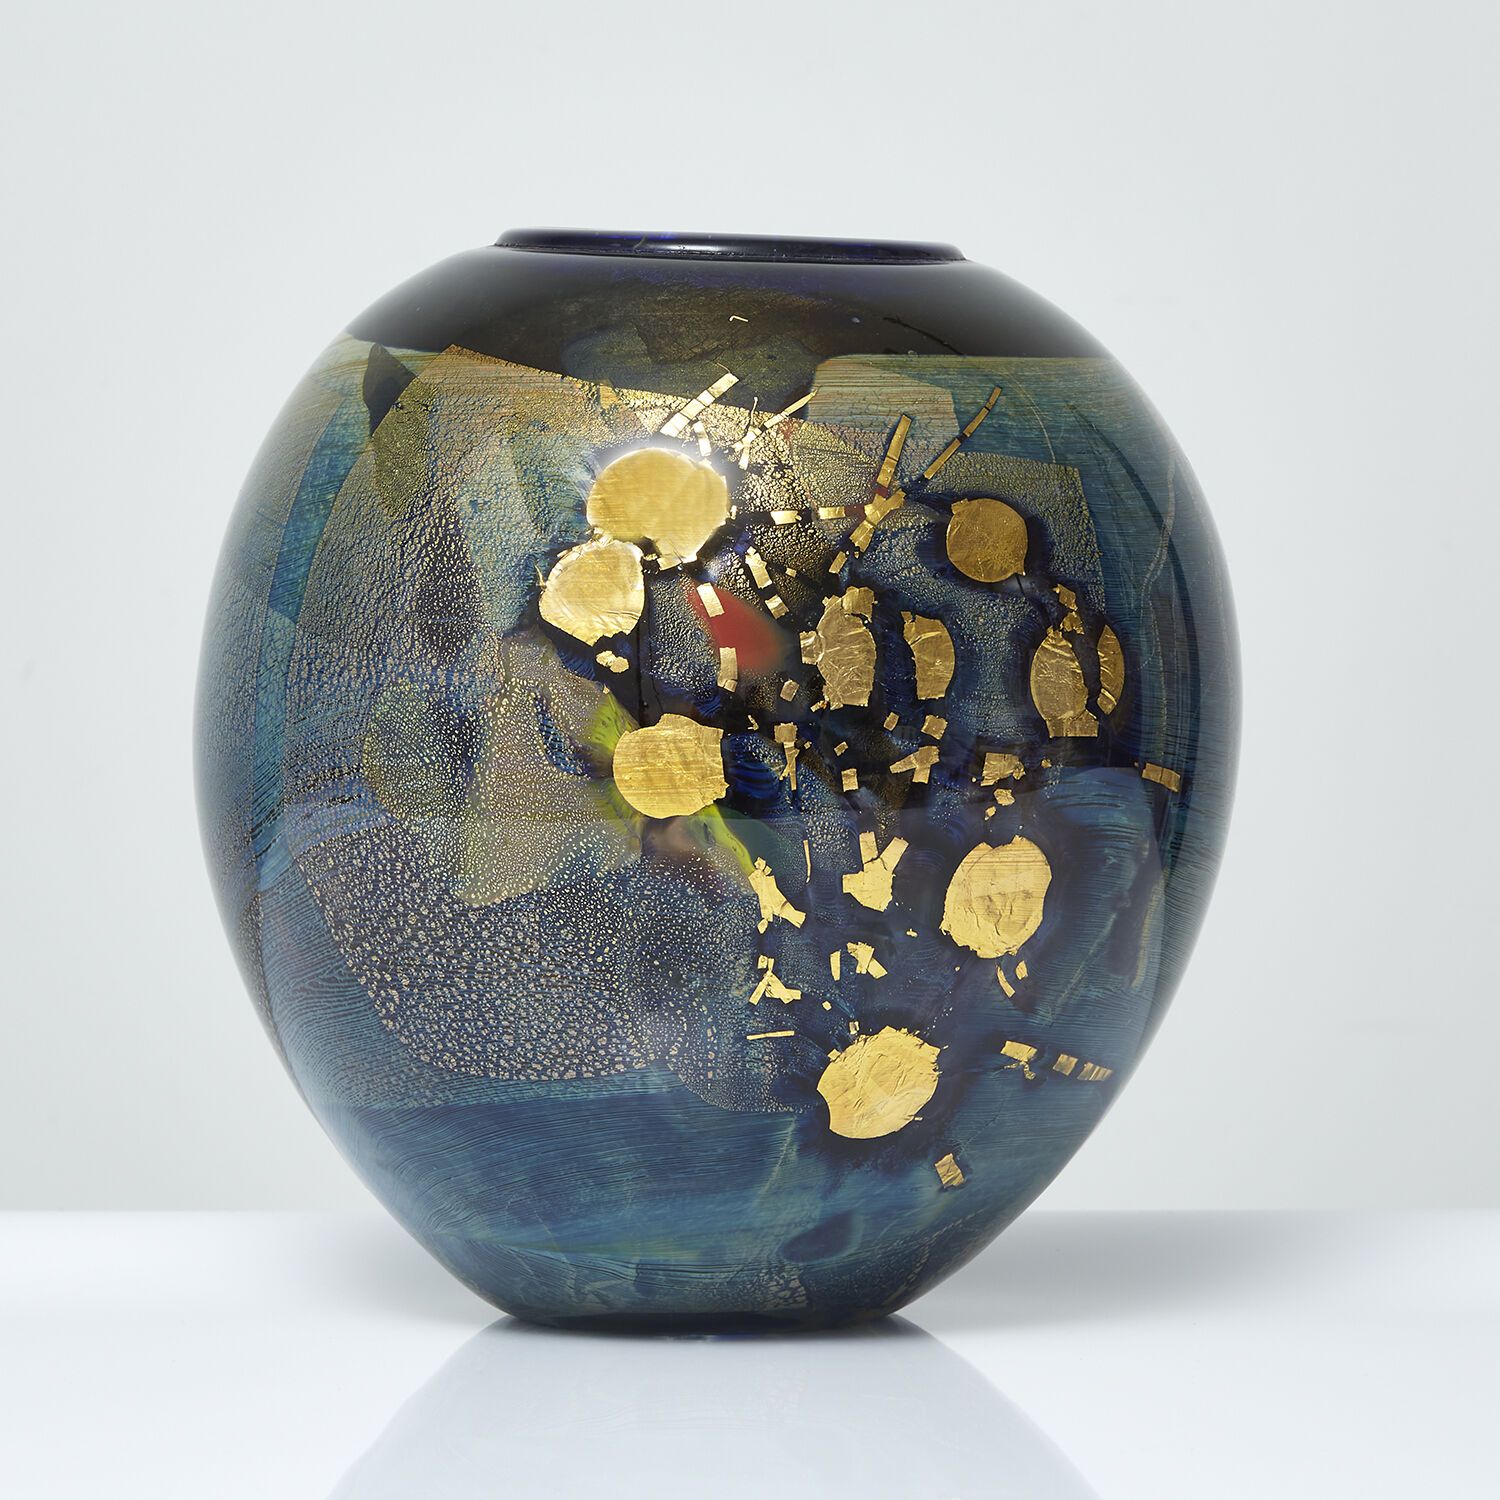 JEAN-CLAUDE NOVARO (1943-2015) 让-克劳德-诺瓦罗(1943-2015)
带有金色盾牌的花瓶，多色吹制玻璃，夹杂着金属粉末和金箔。&hellip;